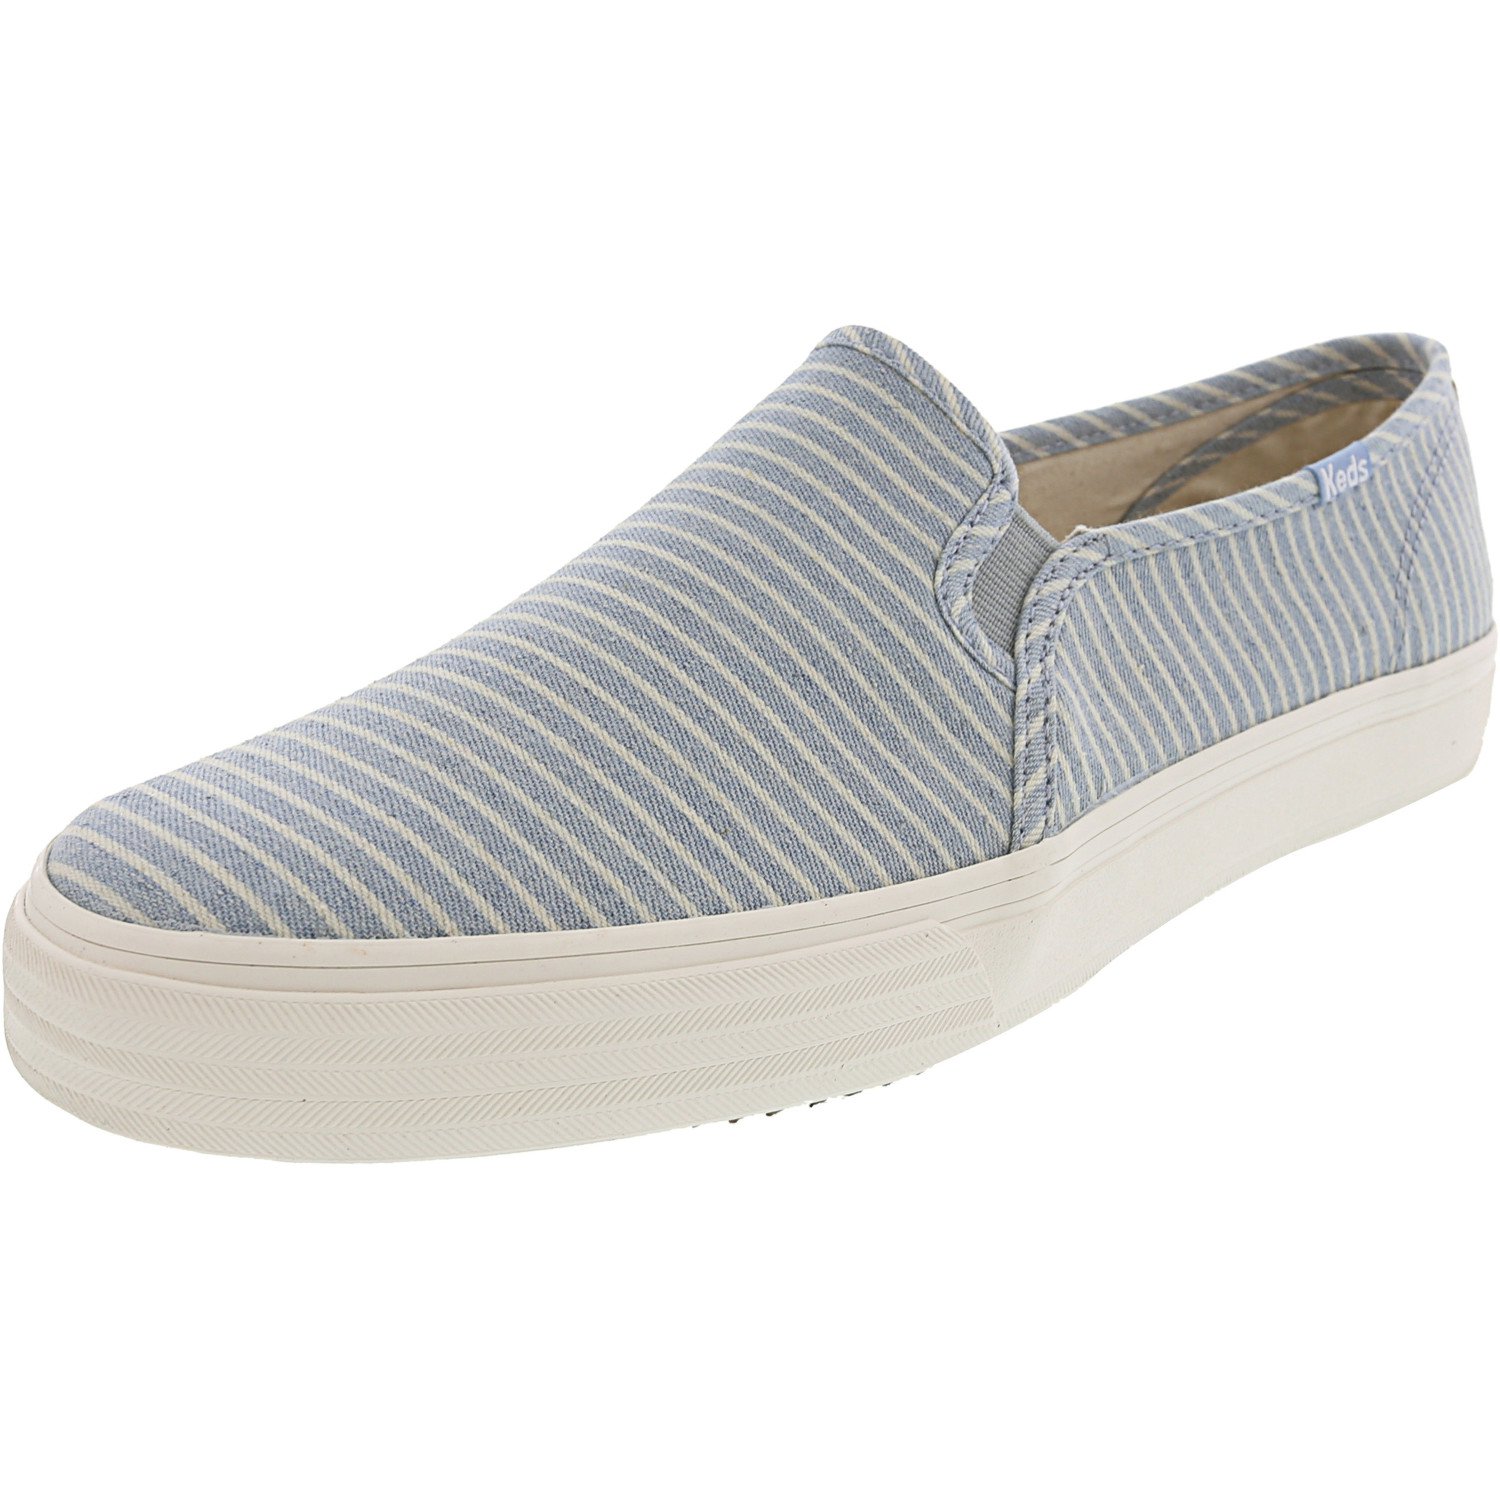 Keds Women's Double Decker Stripe Blue Fabric Slip-On Shoes - 11M ...